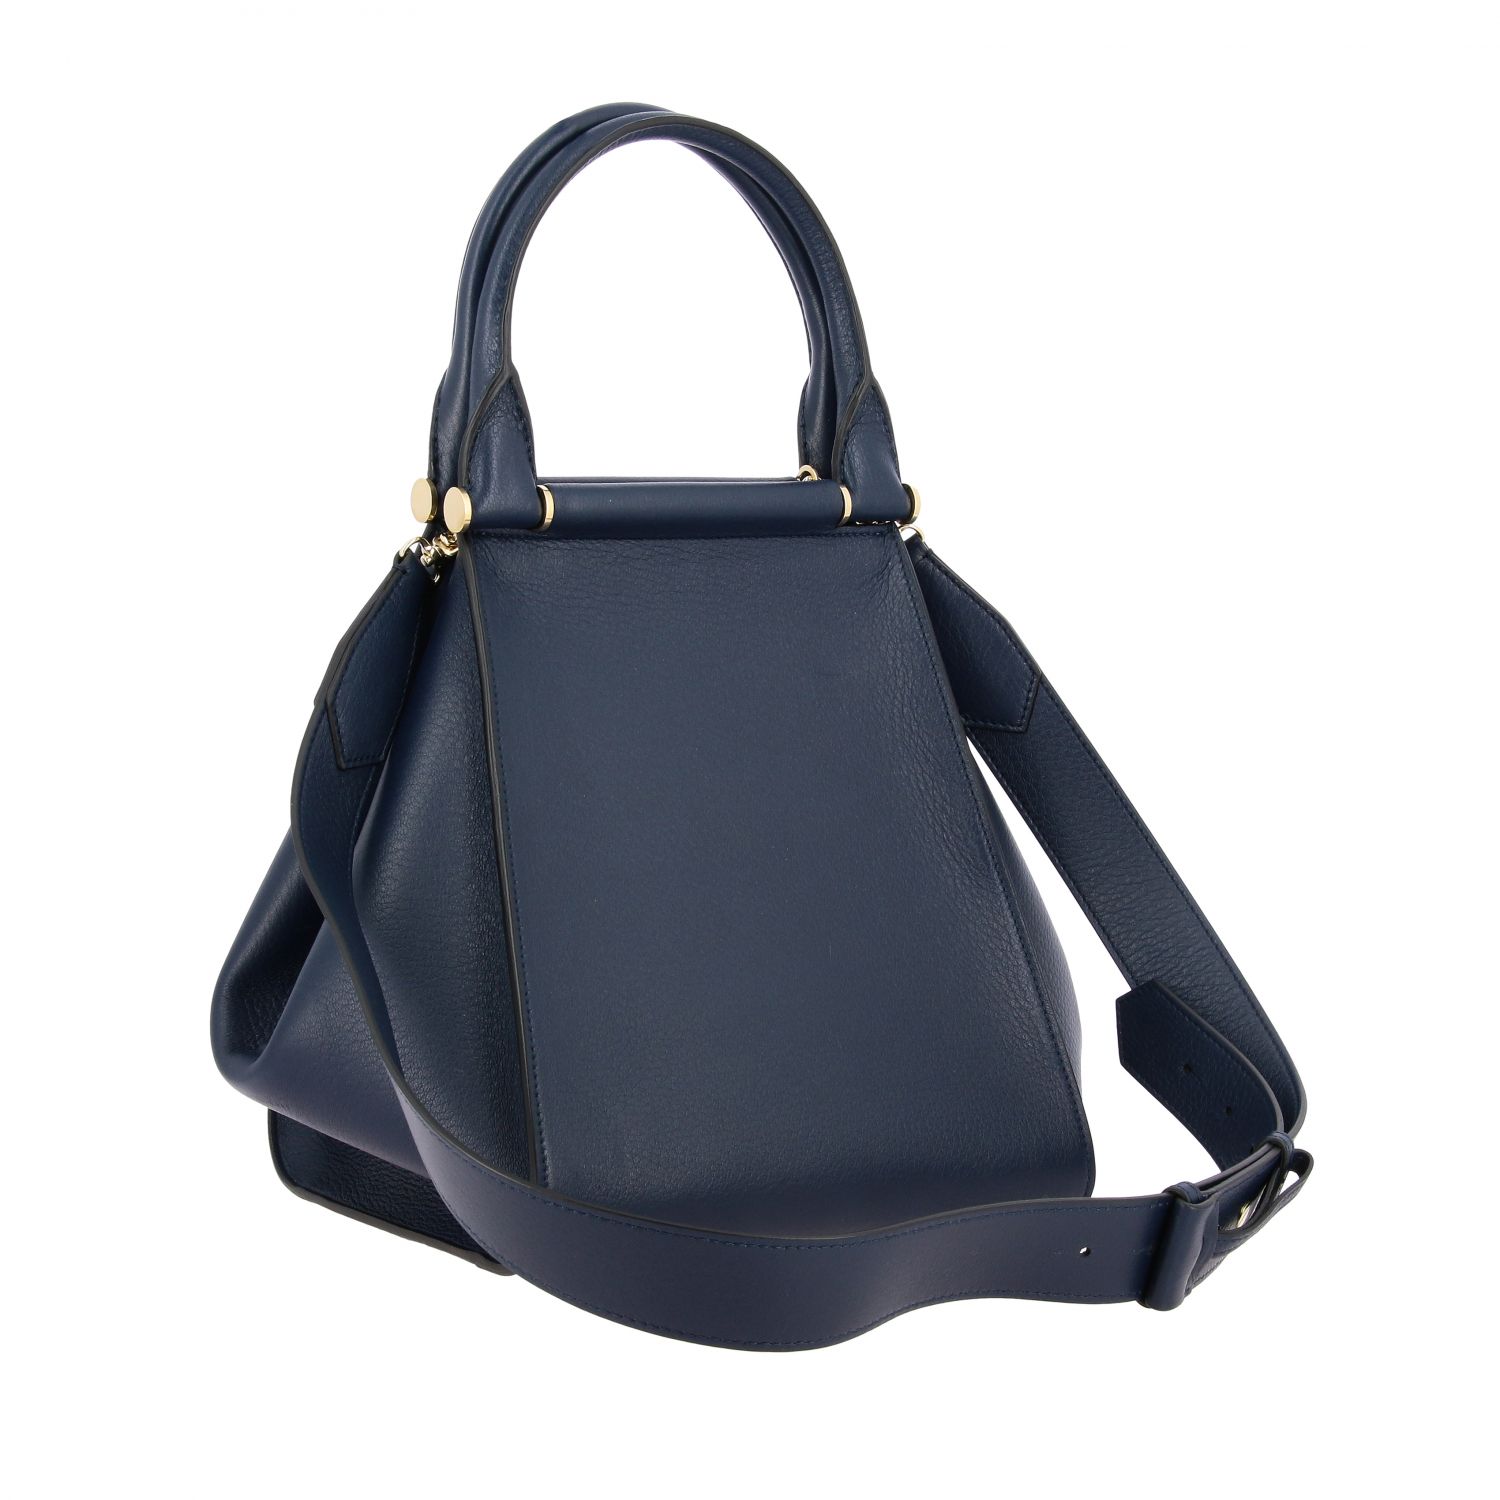 Max Mara Outlet: bag in genuine leather with shoulder strap - Blue ...